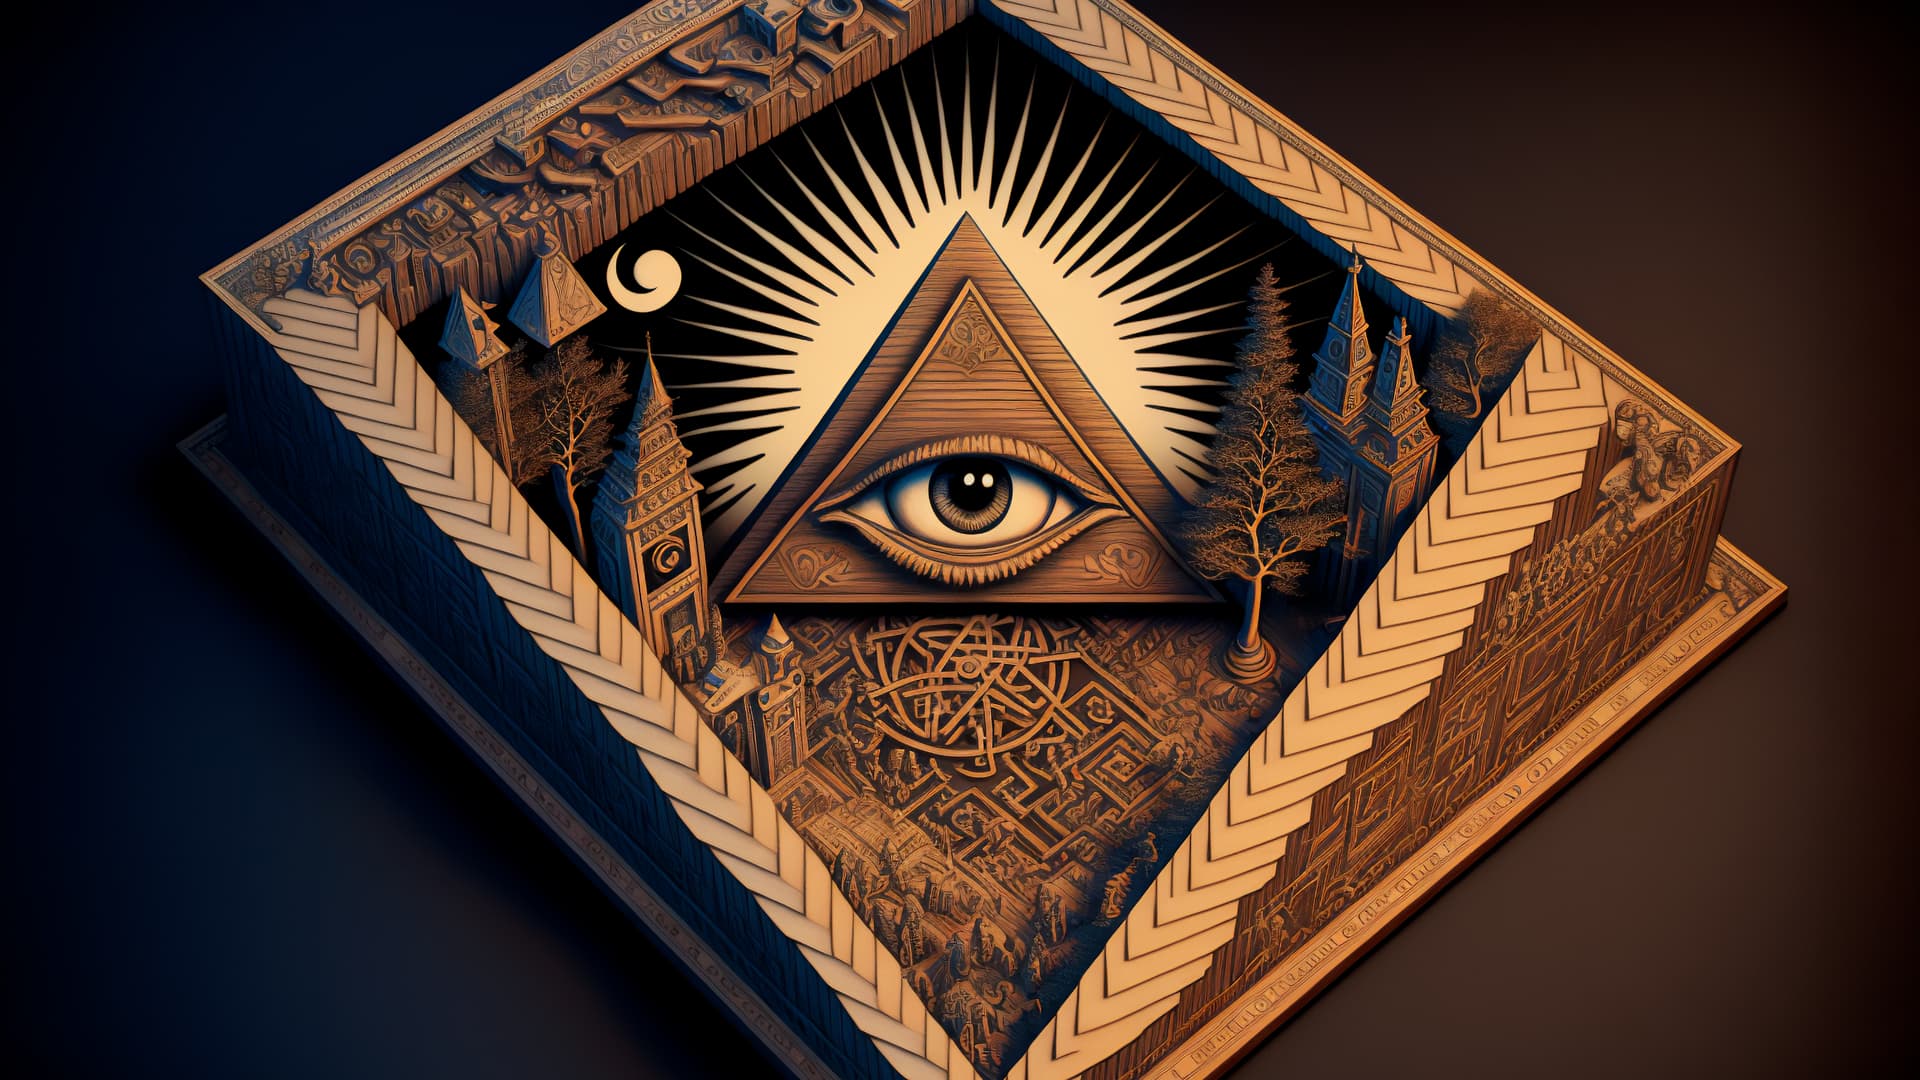 ai-art-illustration-Illuminati-wood-pyramid-eyes-2197611-wallhere.com